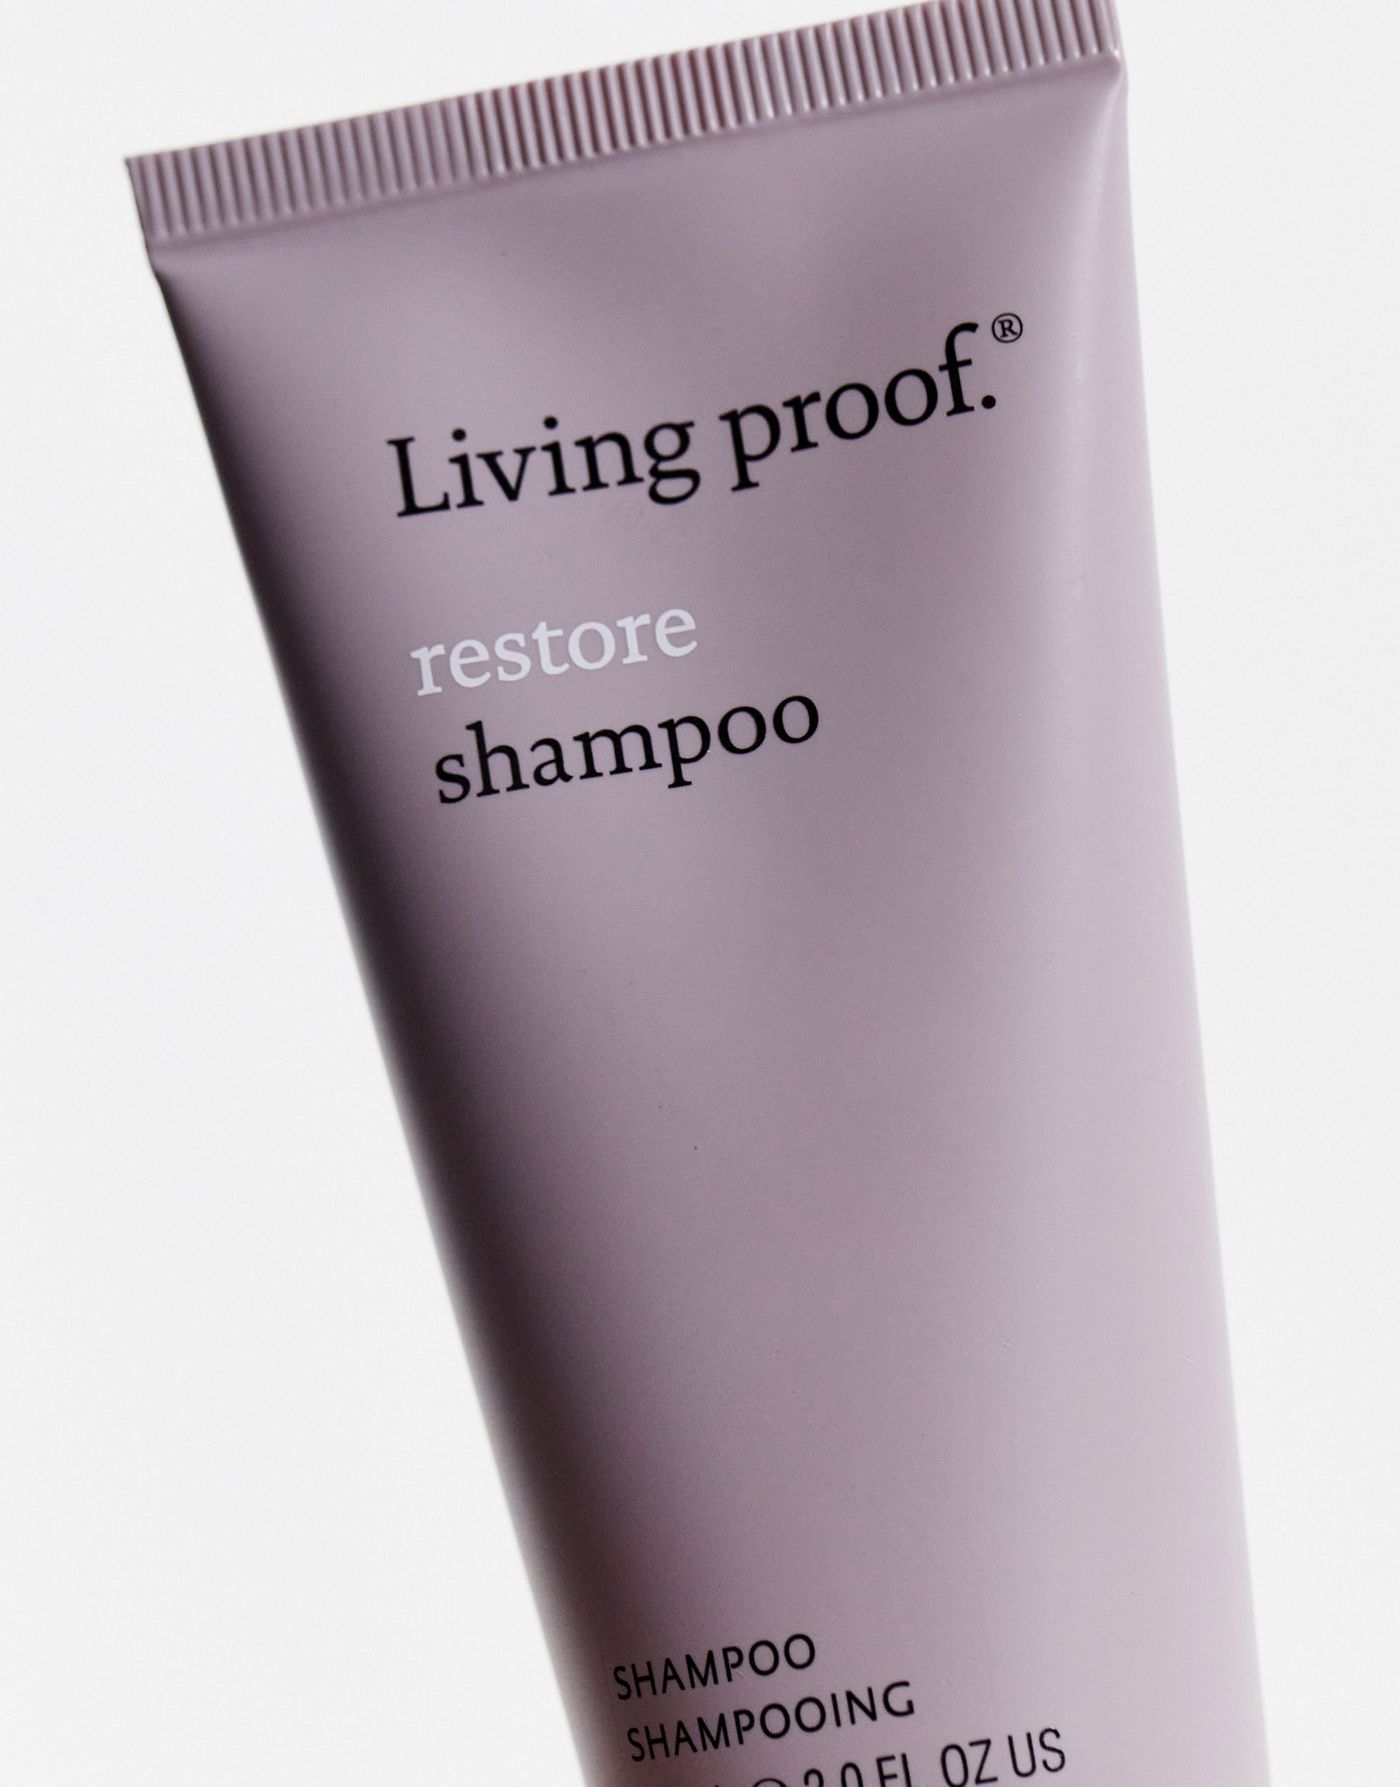 Living Proof Restore Shampoo Travel Size